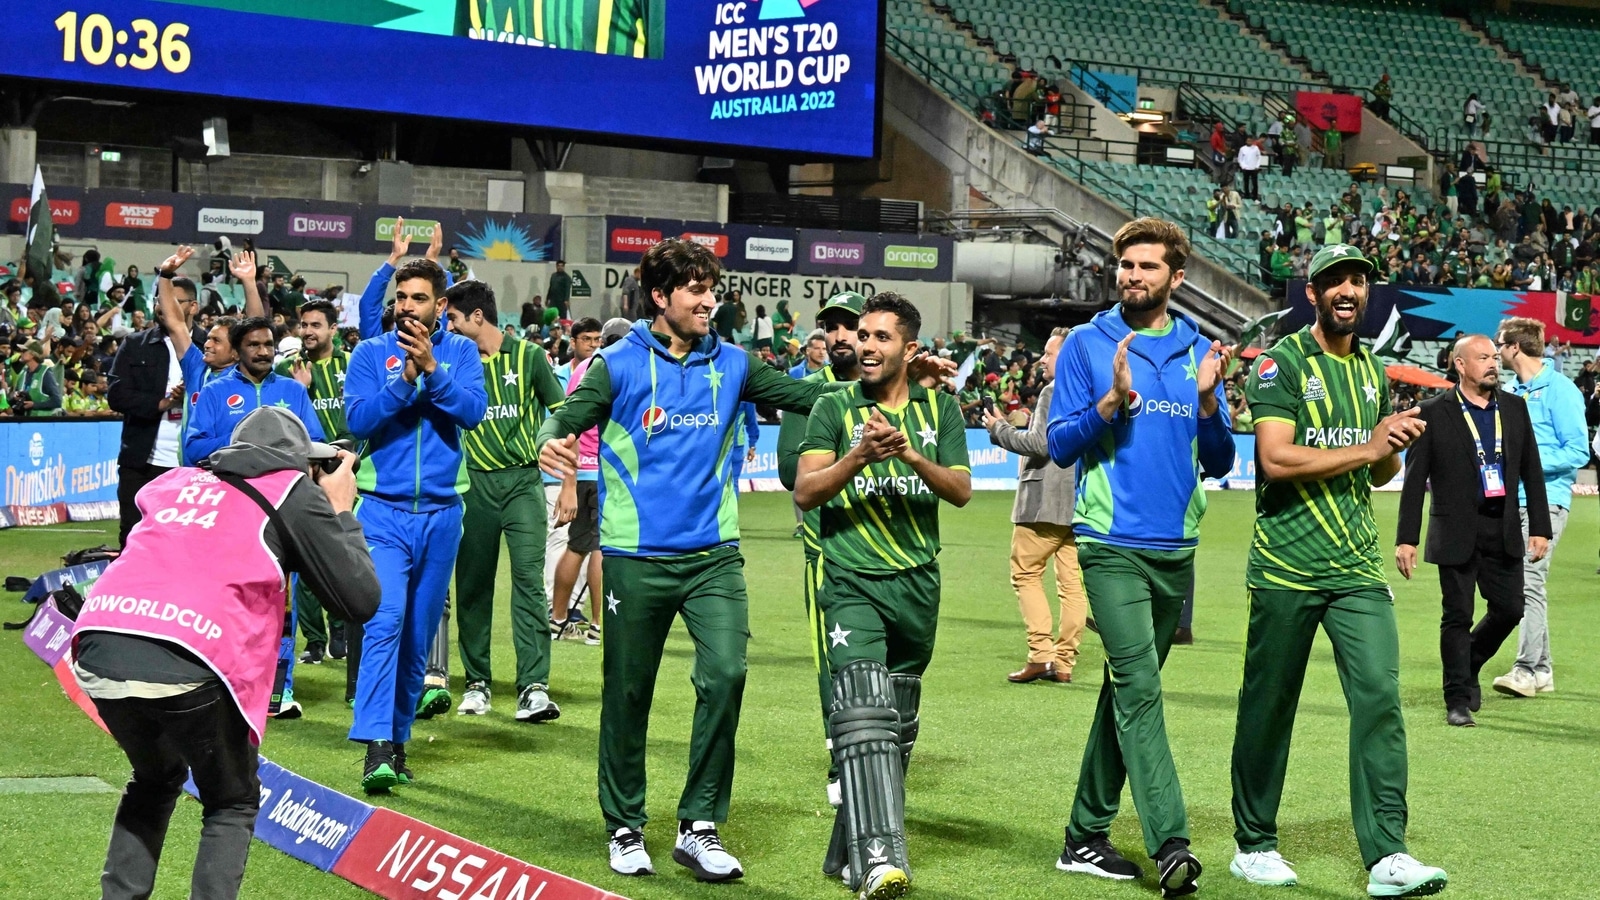 pakistan cricket team last tour of india